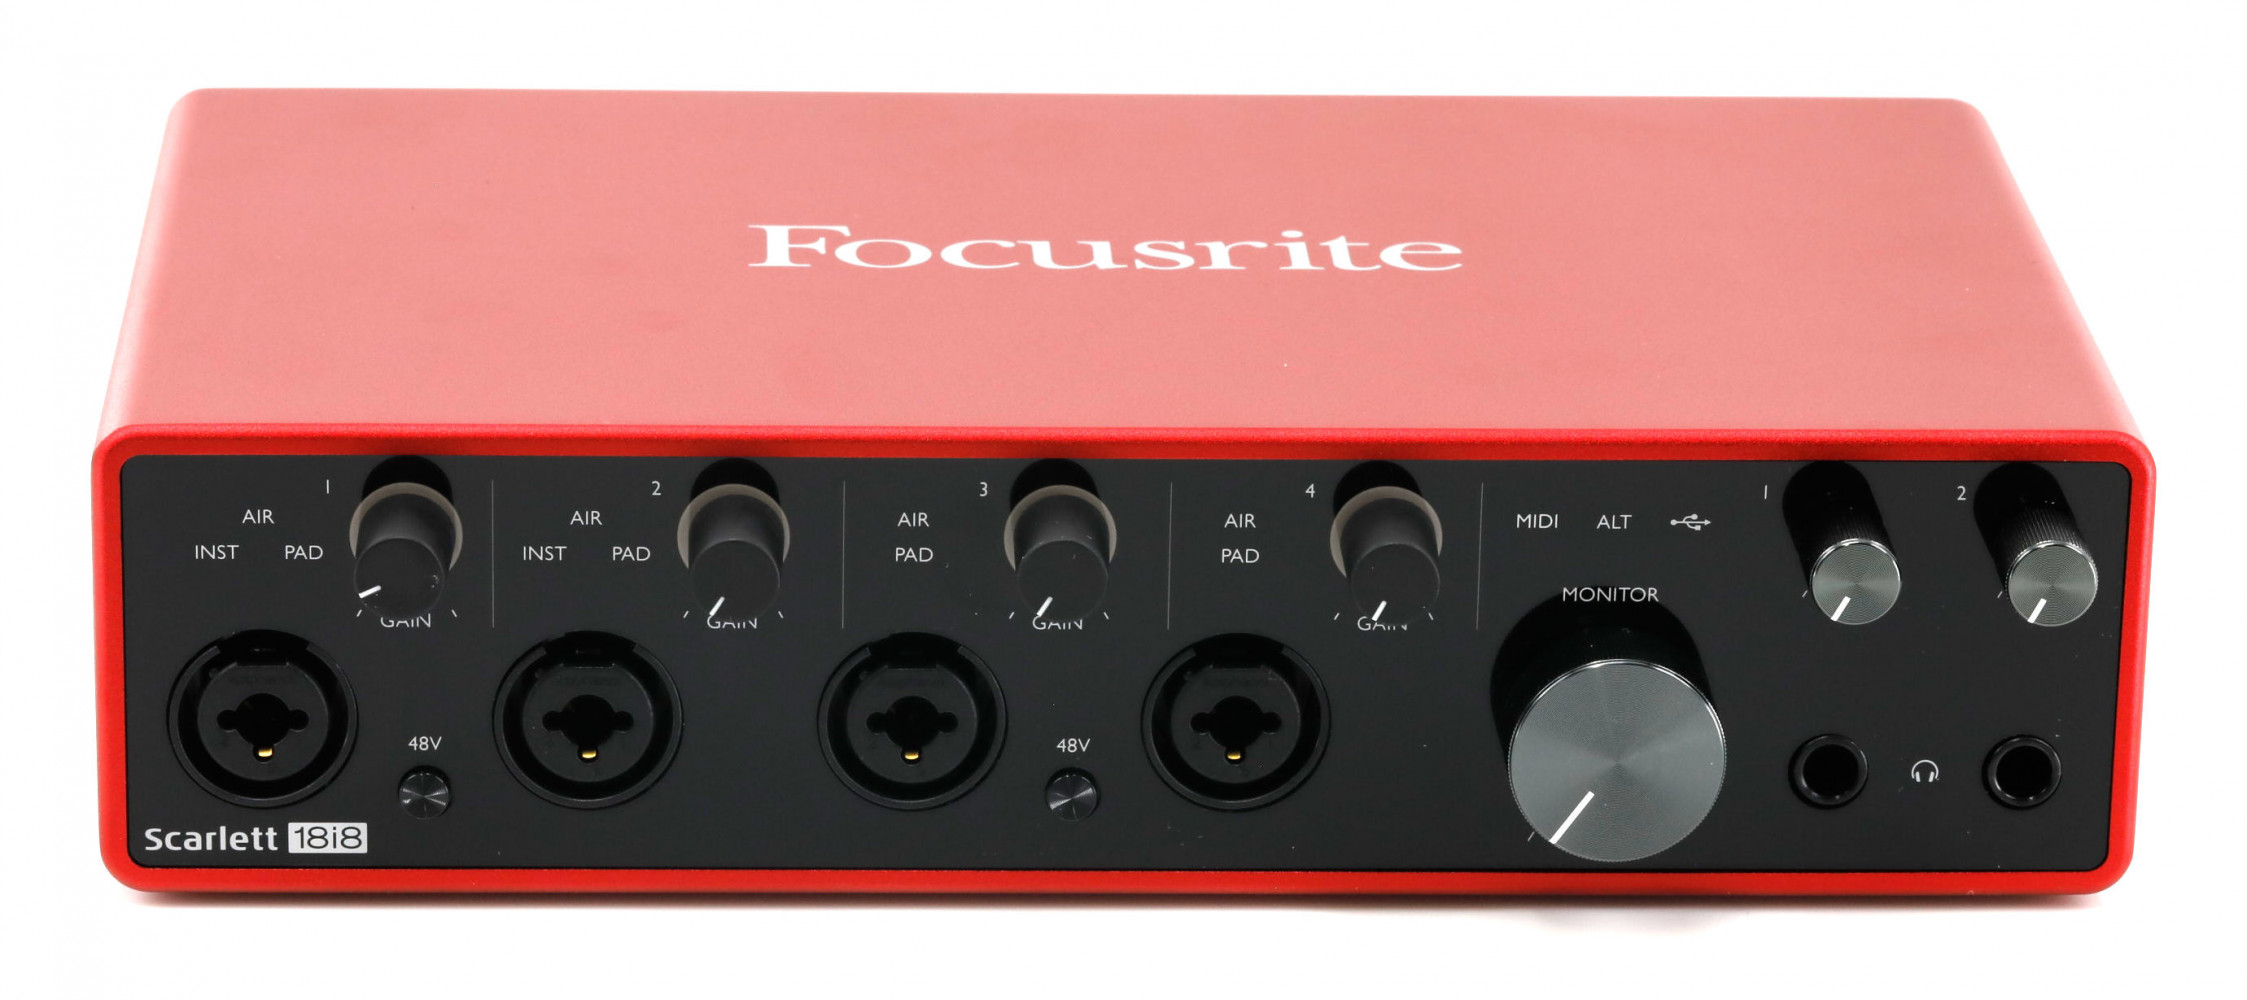 Focusrite Scarlett 18i8 USB Audio Interface (3rd Gen)